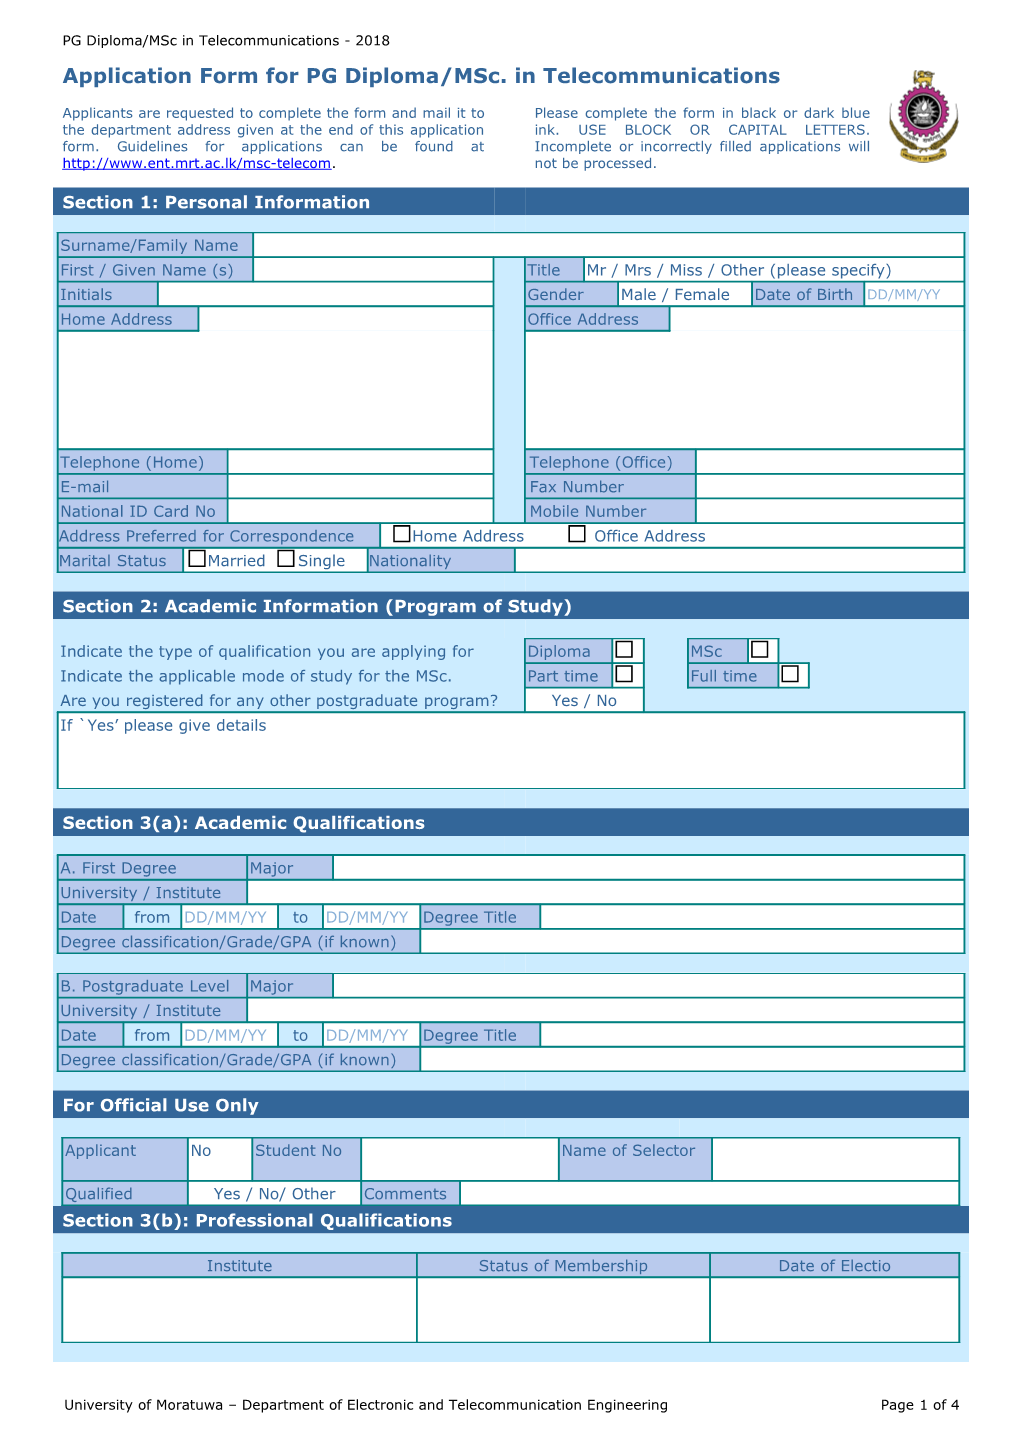 Application Form for PG Diploma/Msc